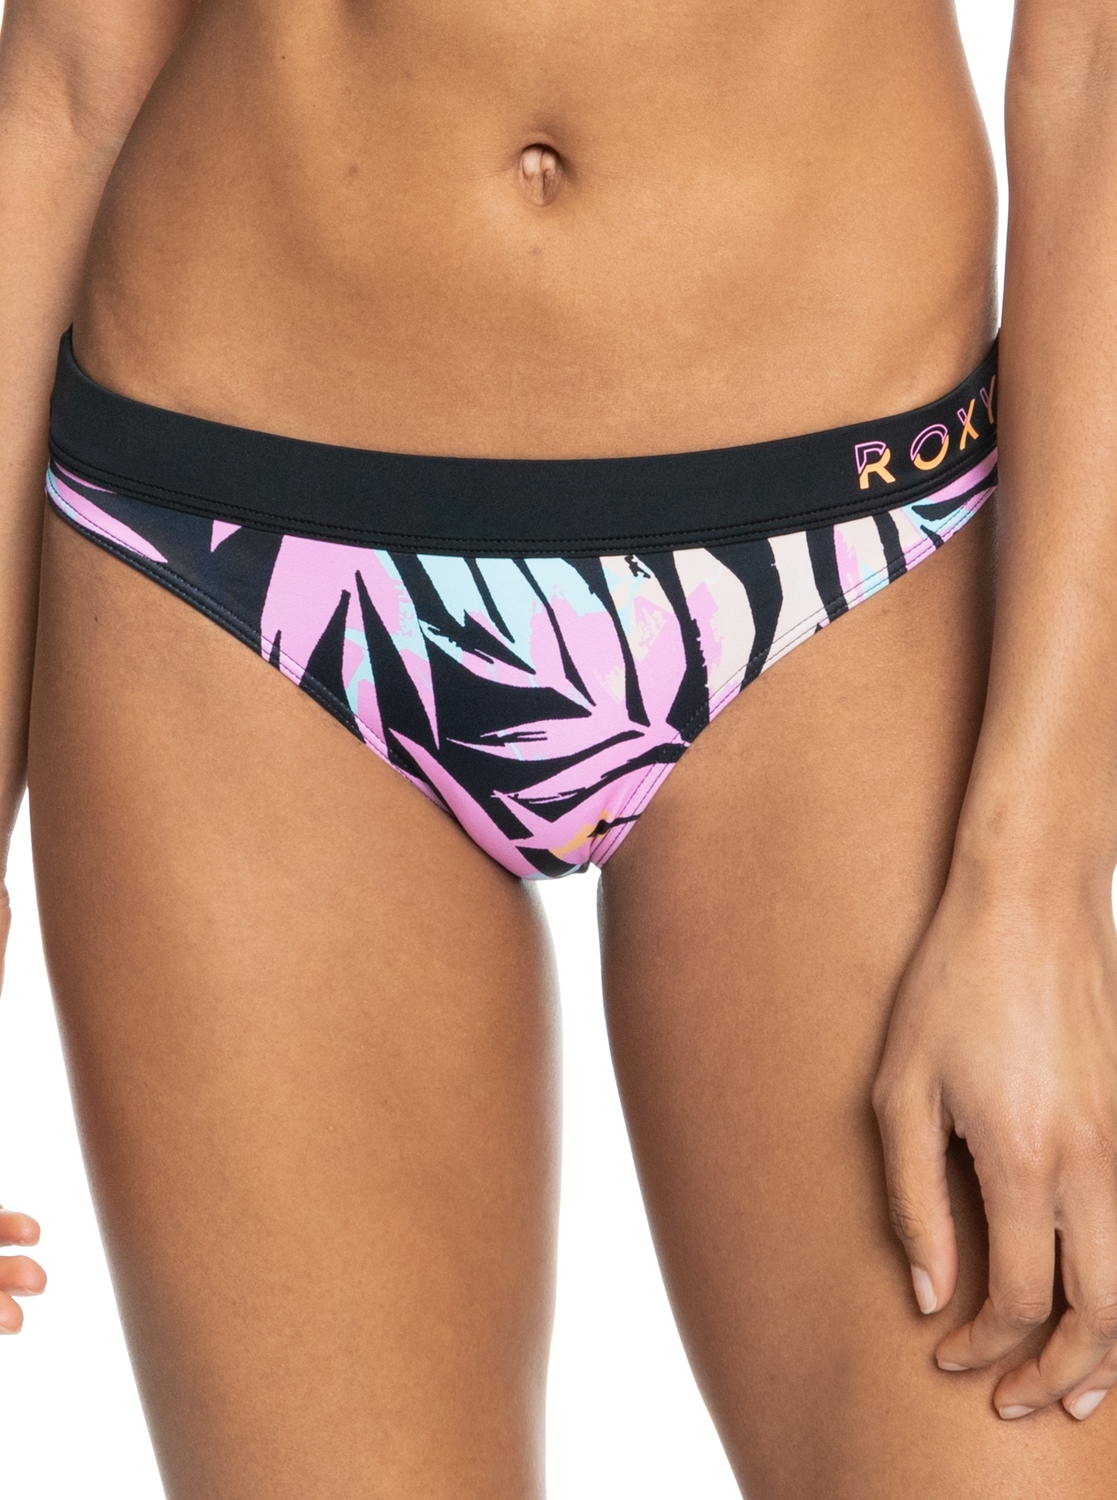 Roxy Bikini-Hose »Roxy Active«